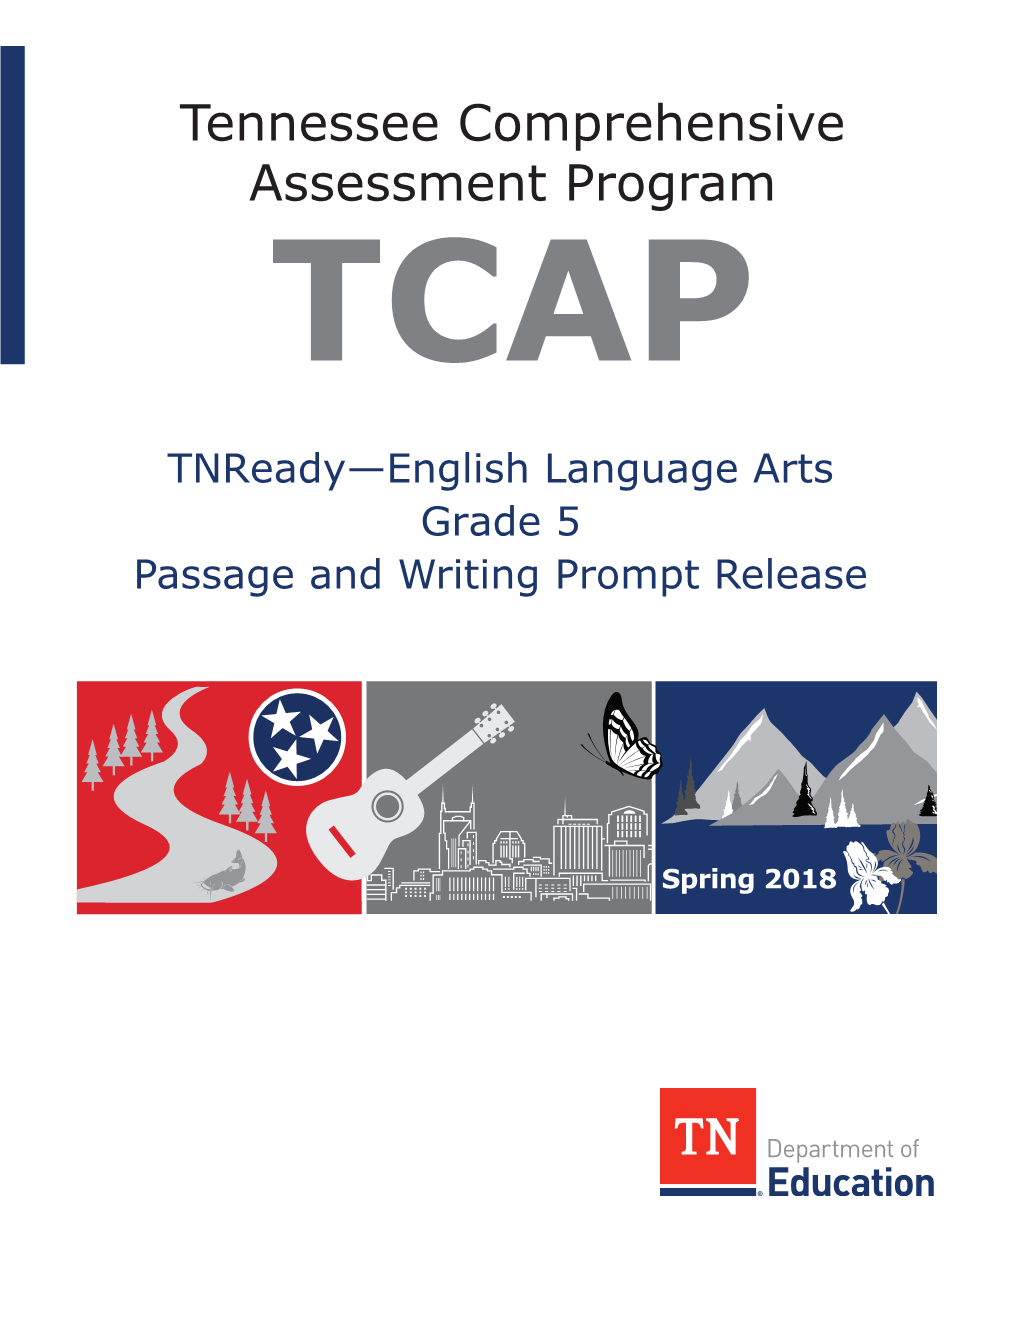 Tennessee Comprehensive Assessment Program TCAP